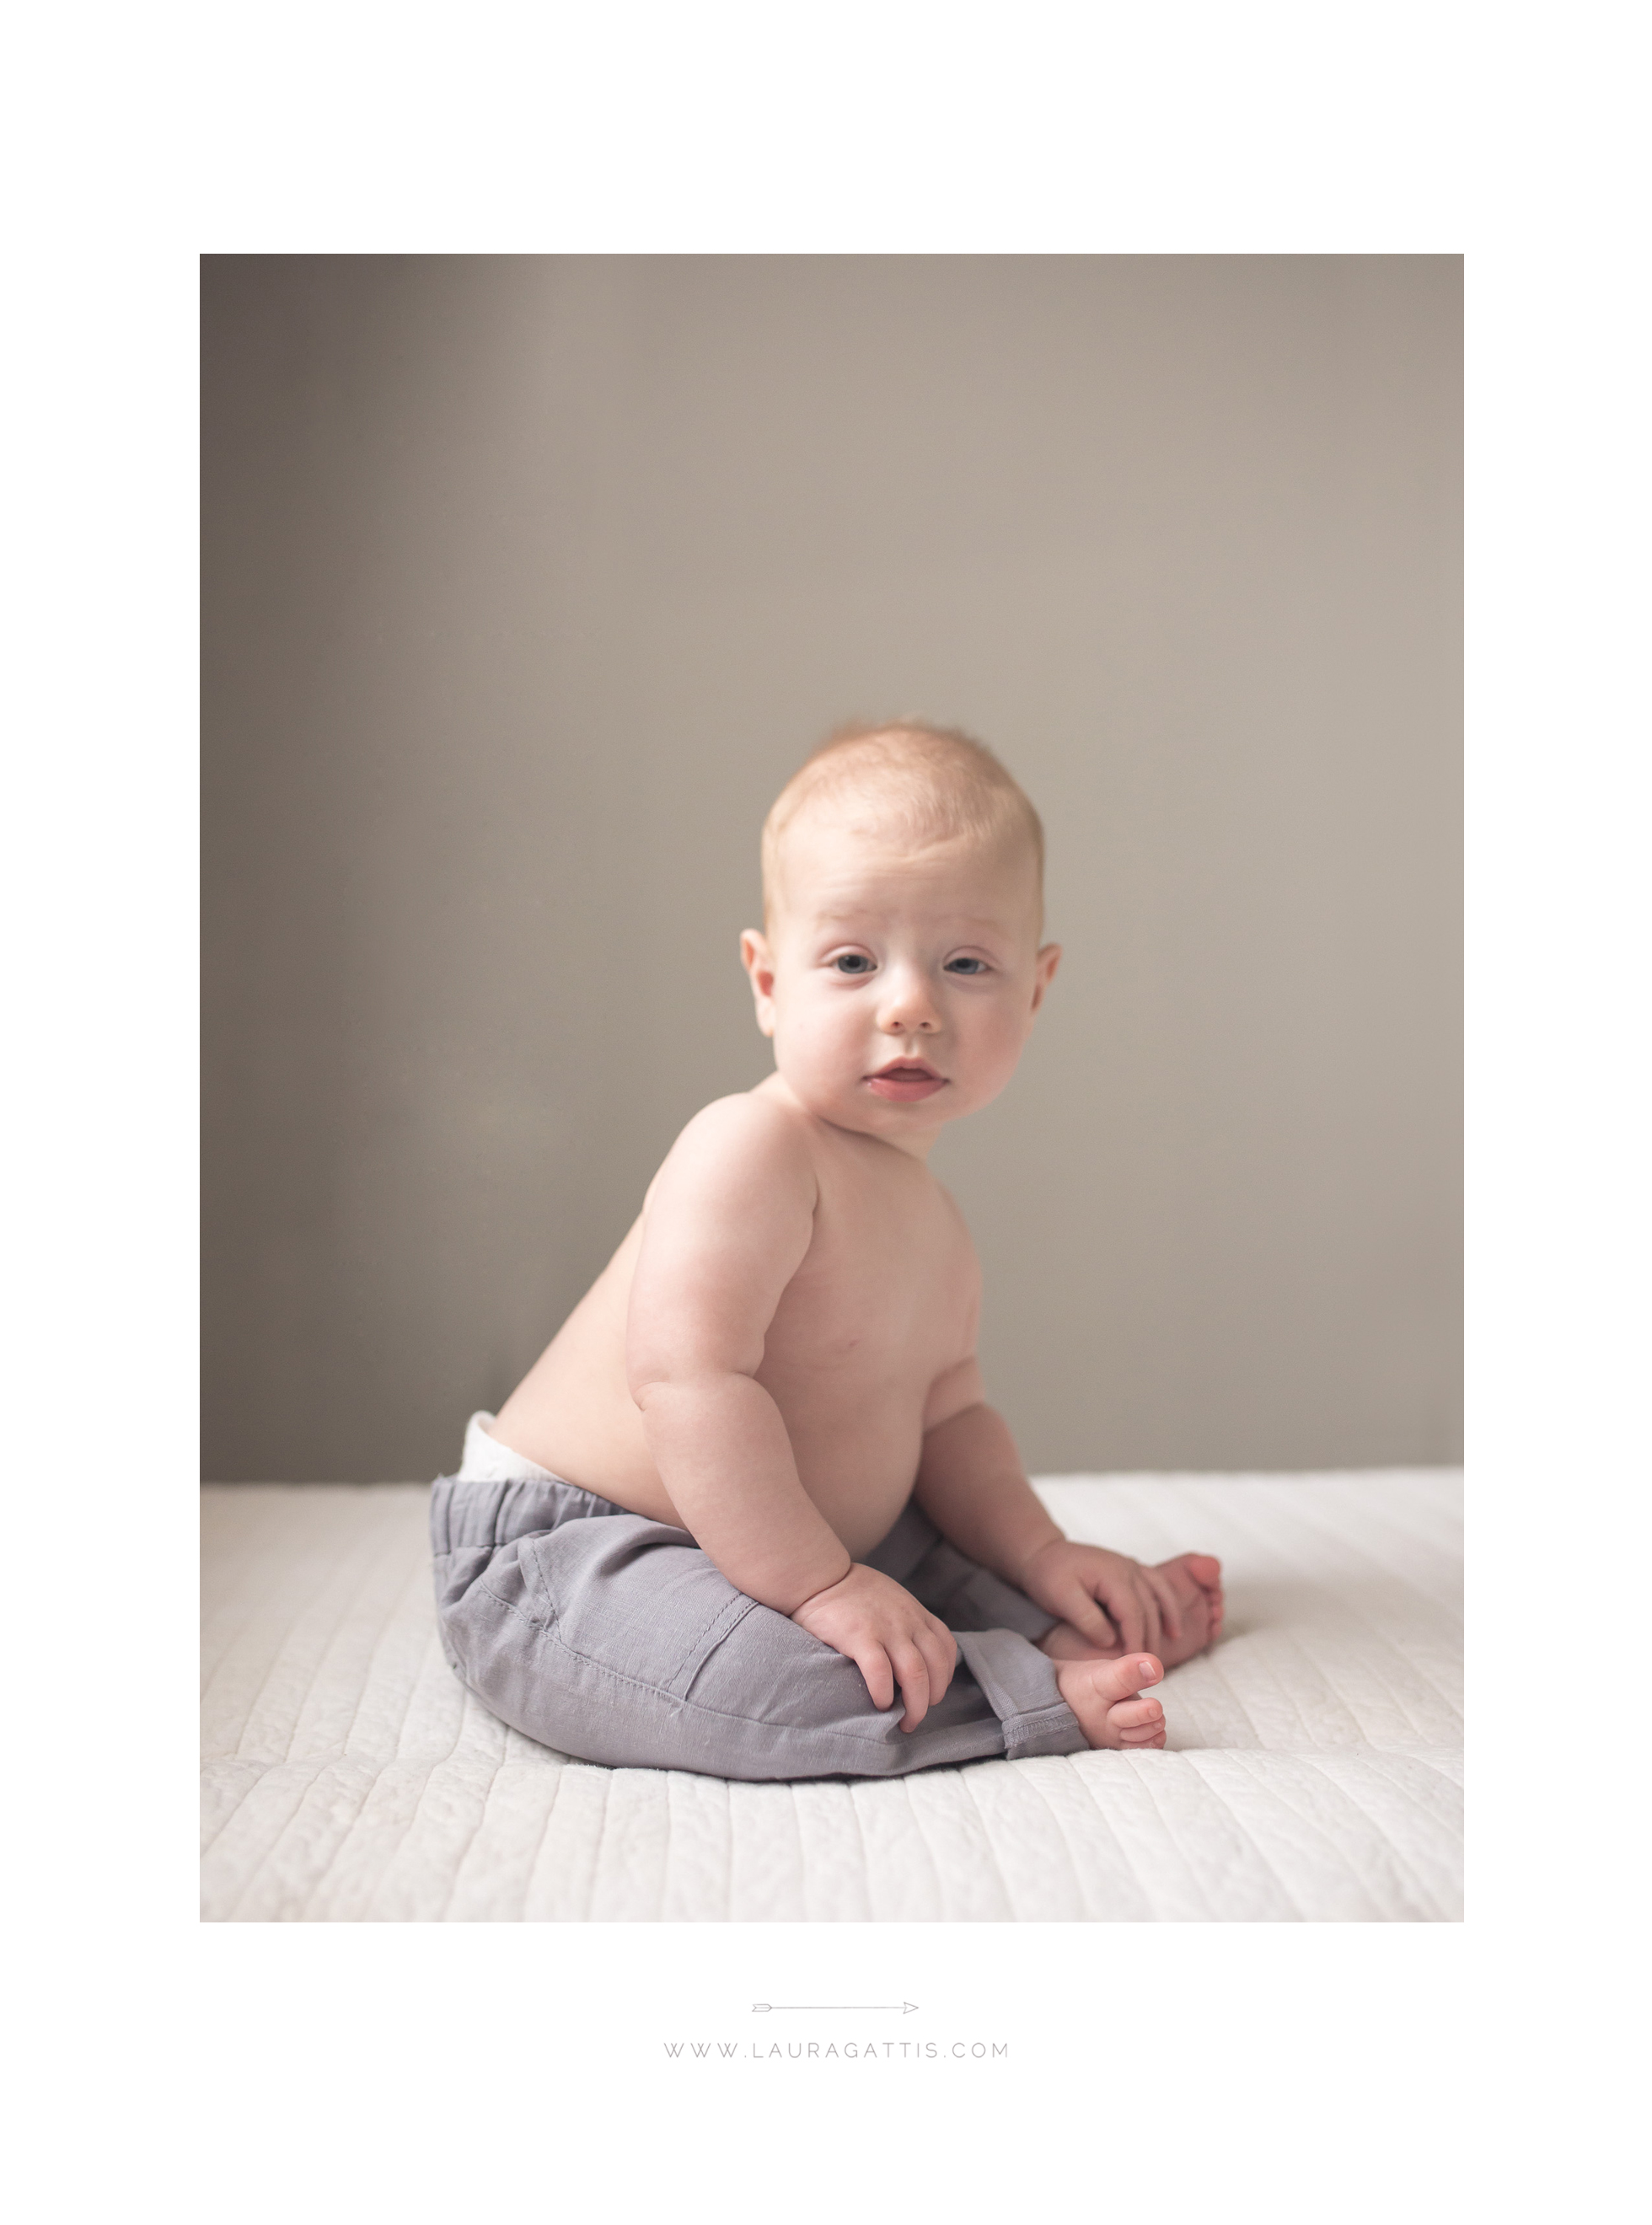 creamy natural light studio baby milestone session | laura gattis photography